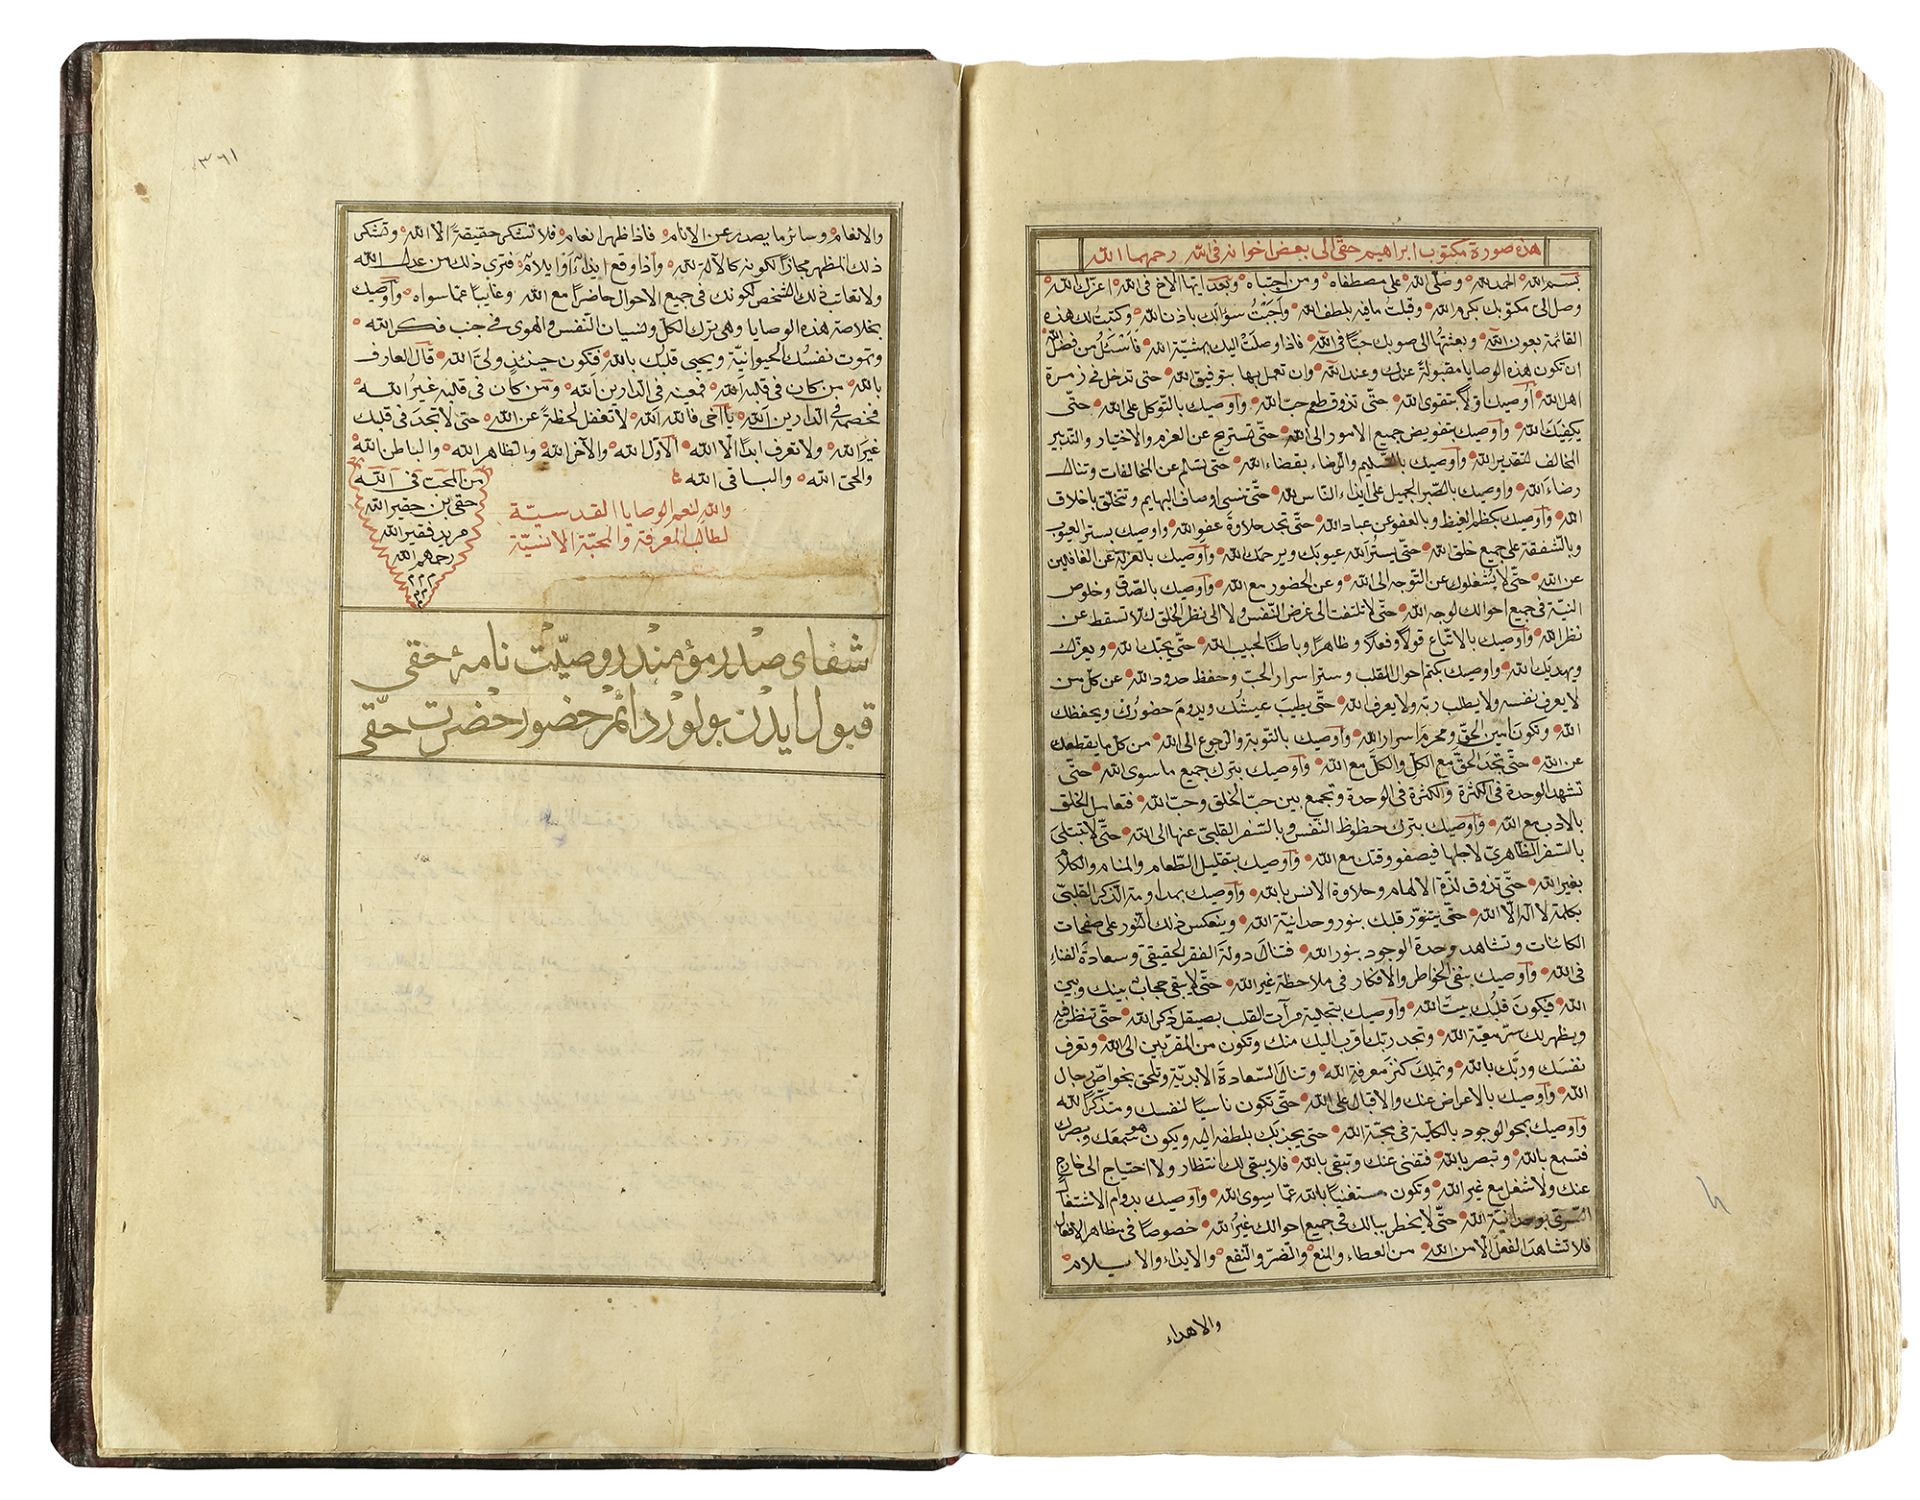 MARIFETNAME, IBRAHIM HAKKI, COPIED BY SAE'D ALLAH BIN ALI BIN AHMED, TURKEY, 1221 AH/1806 AD - Image 46 of 58